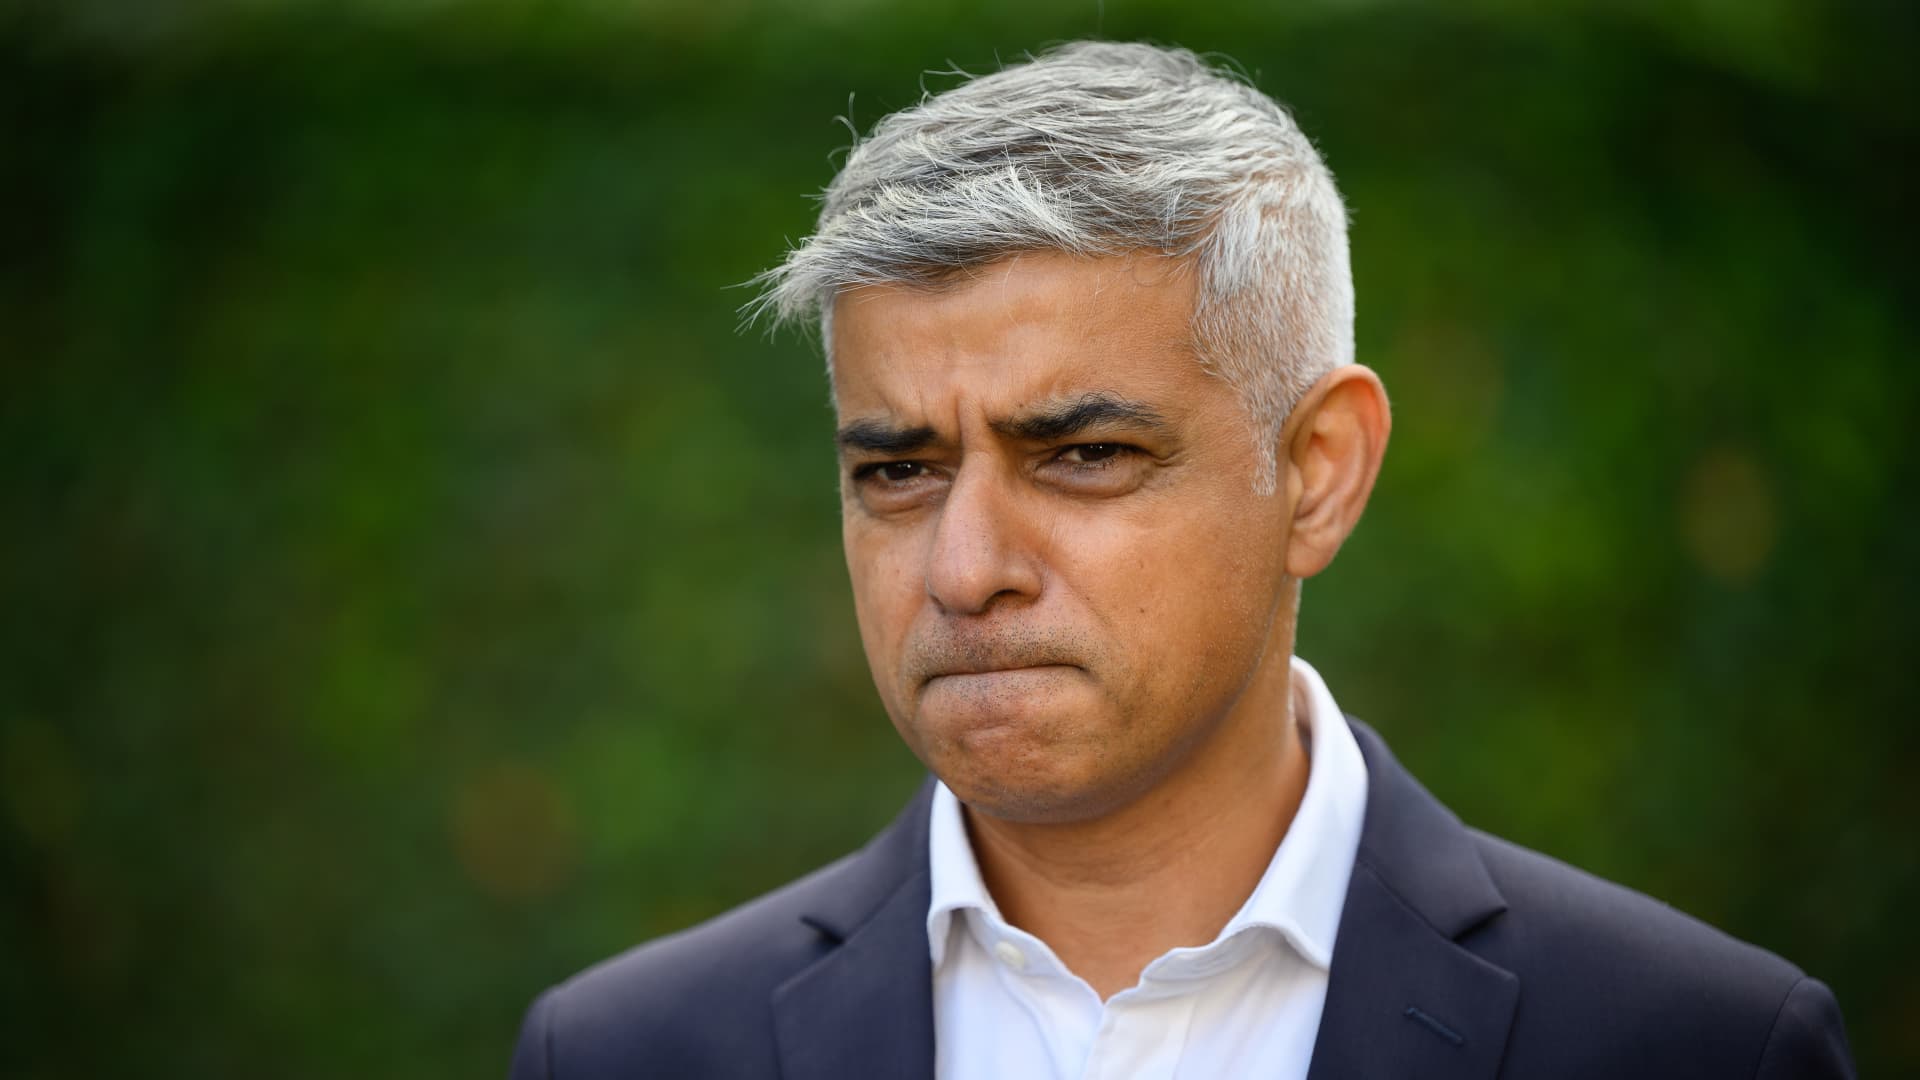 Labour’s Sadiq Khan wins re-election as London mayor